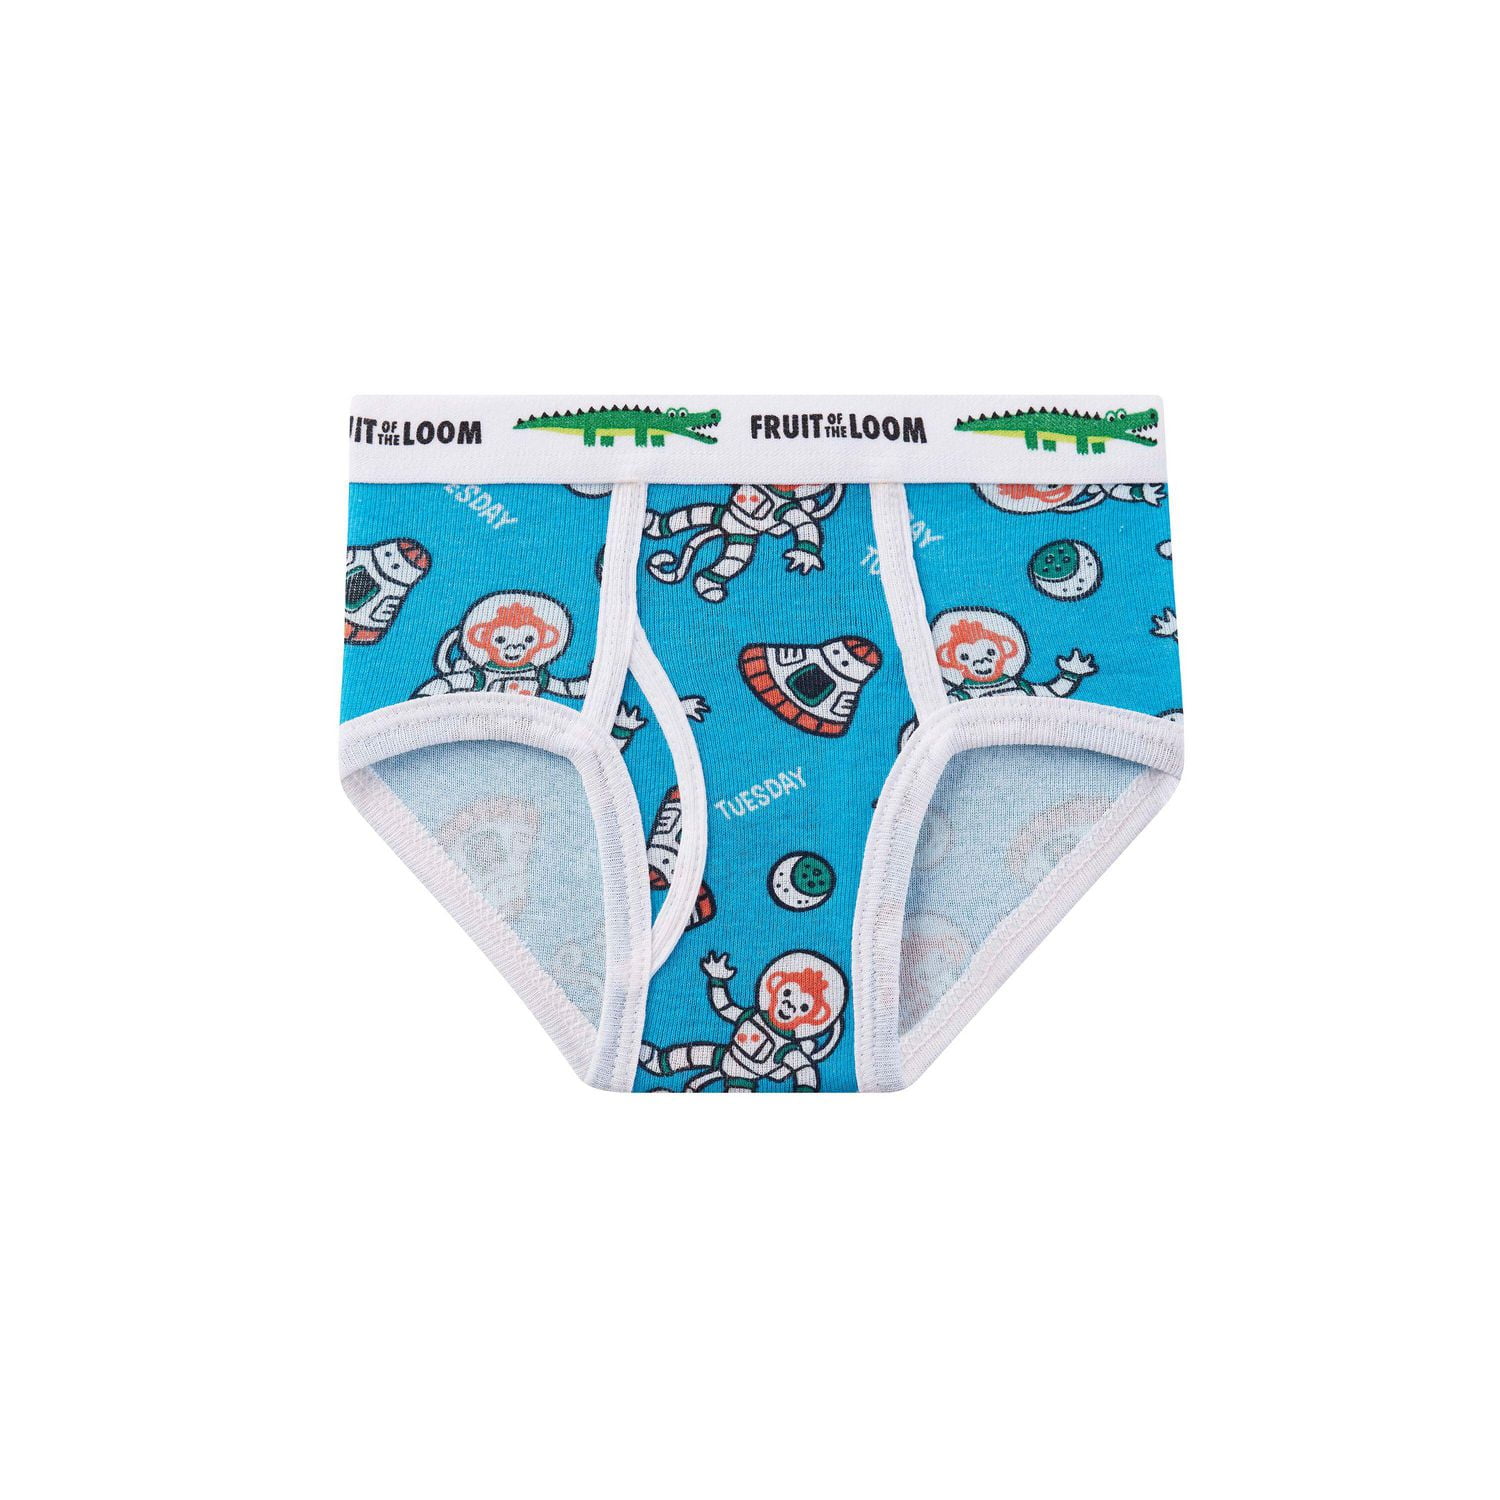  Boys Underwear Toddler Size 3T 100% Organic Cotton Boxer  Briefs Kids Dinosaur Ship Boxers Soft Clothes Childrens Undies Age 3 Years  Old Underpants